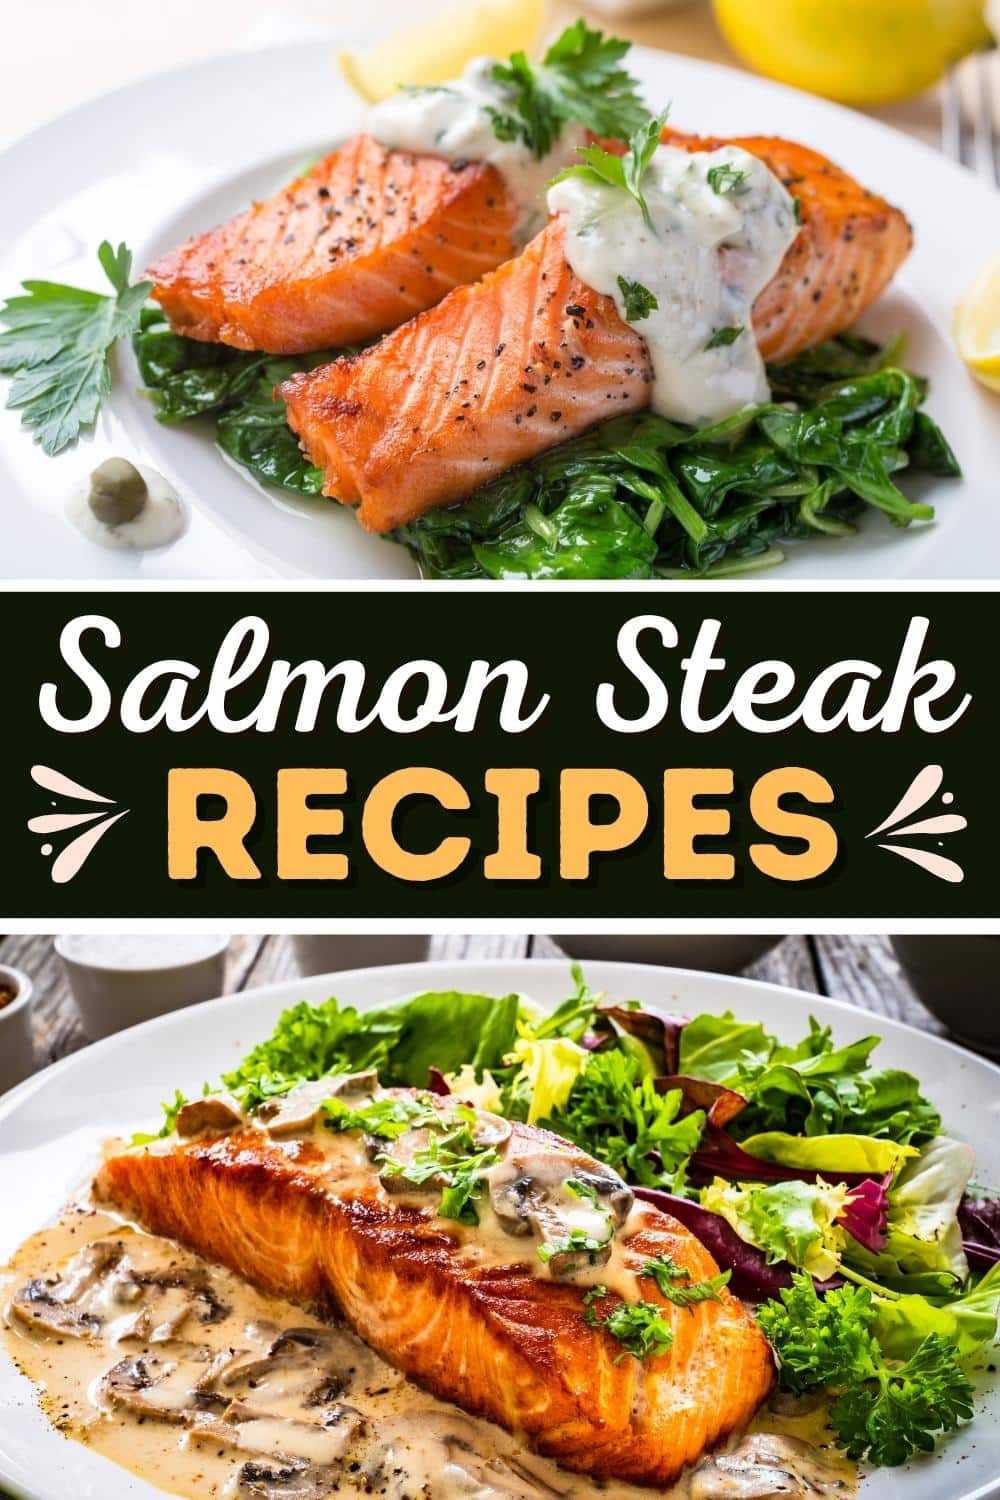 10 Easy Salmon Steak Recipes to Try for Dinner - Insanely Good